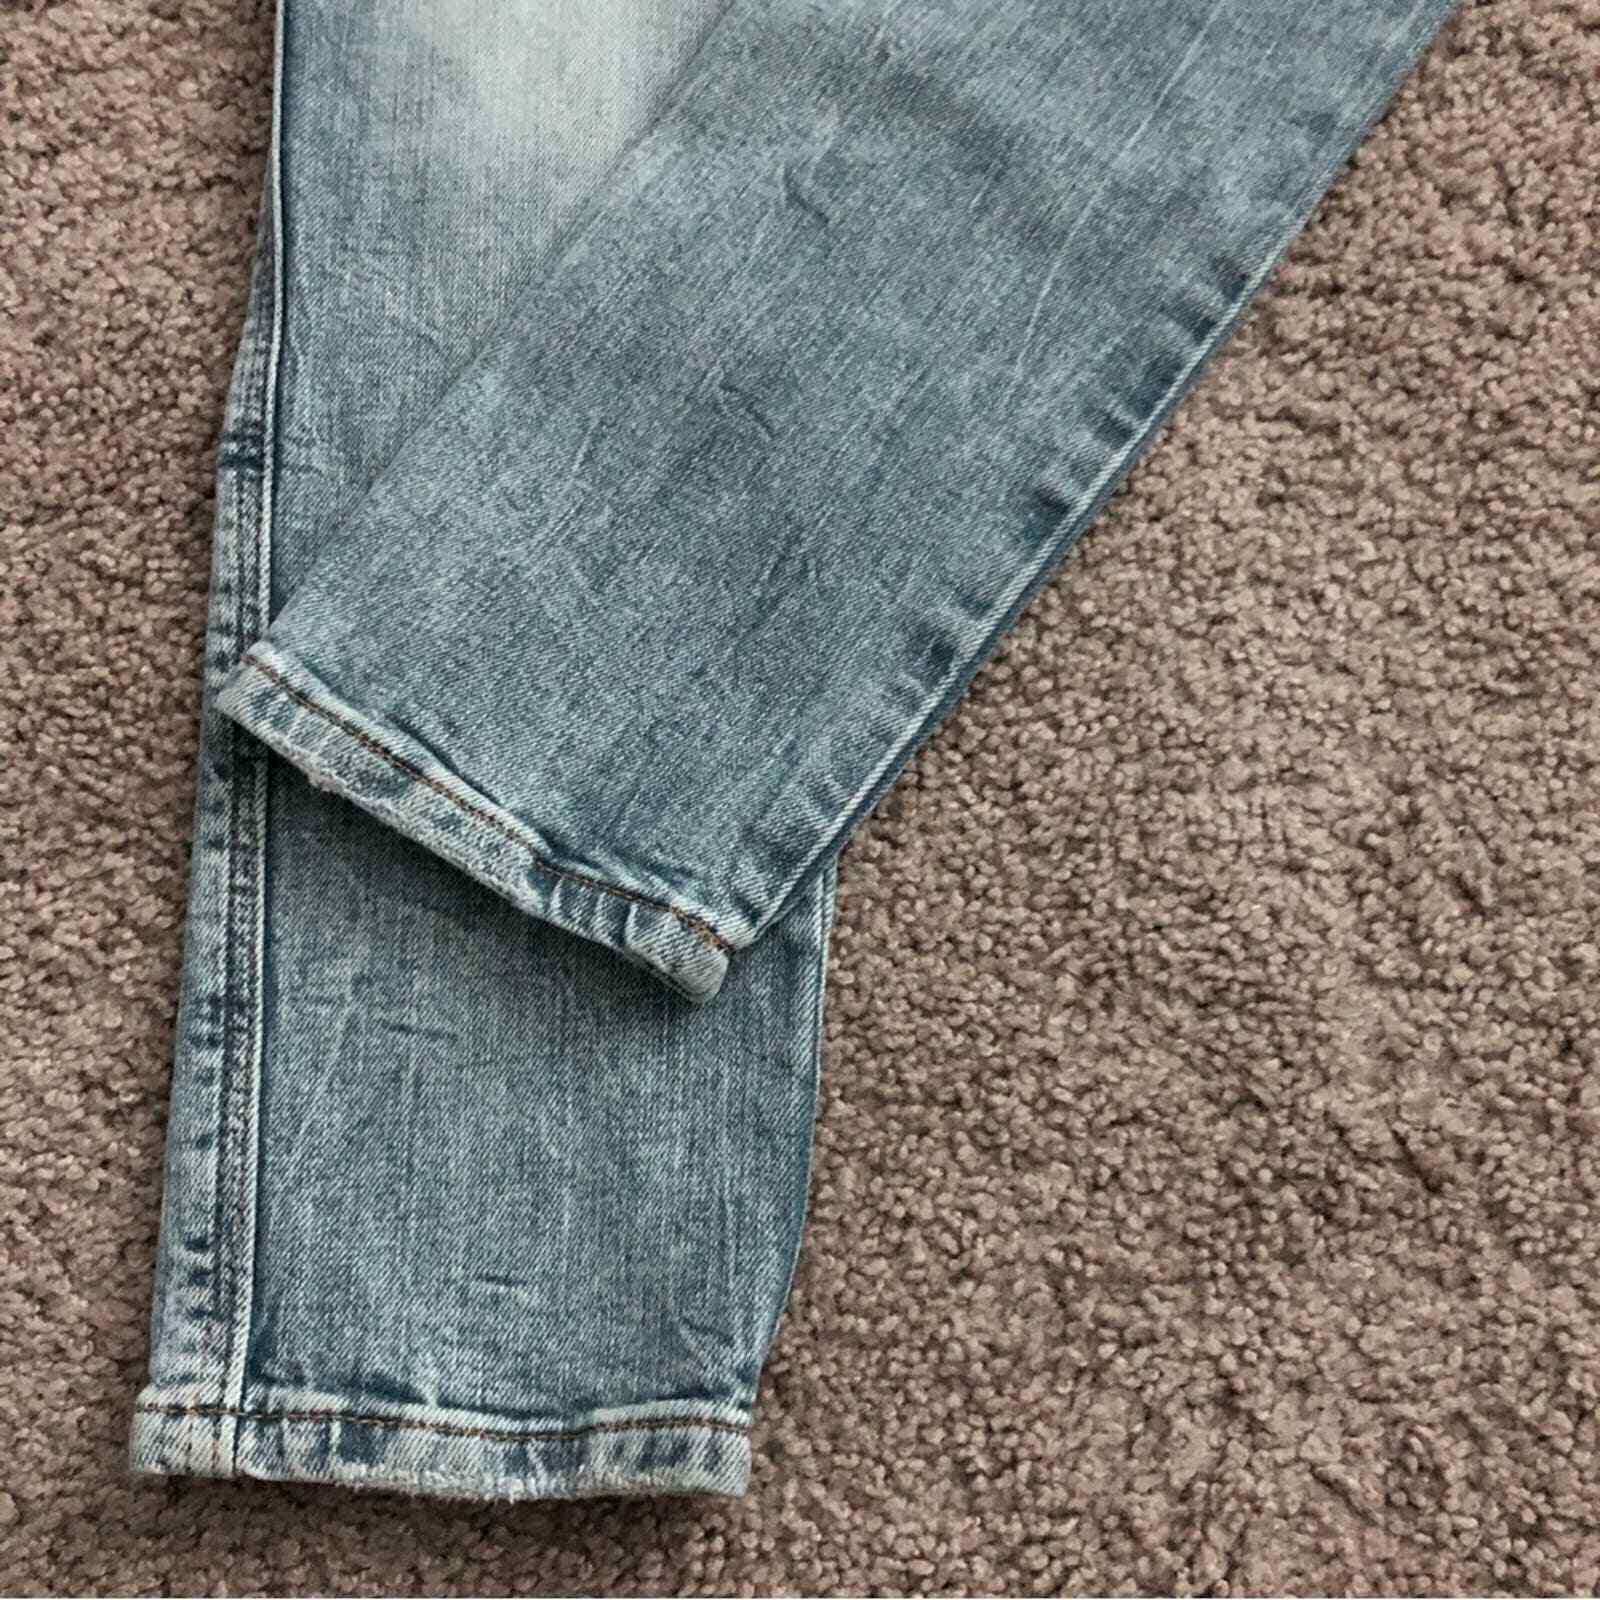 Zara Trafaluc Denimwear Jeans - image 11